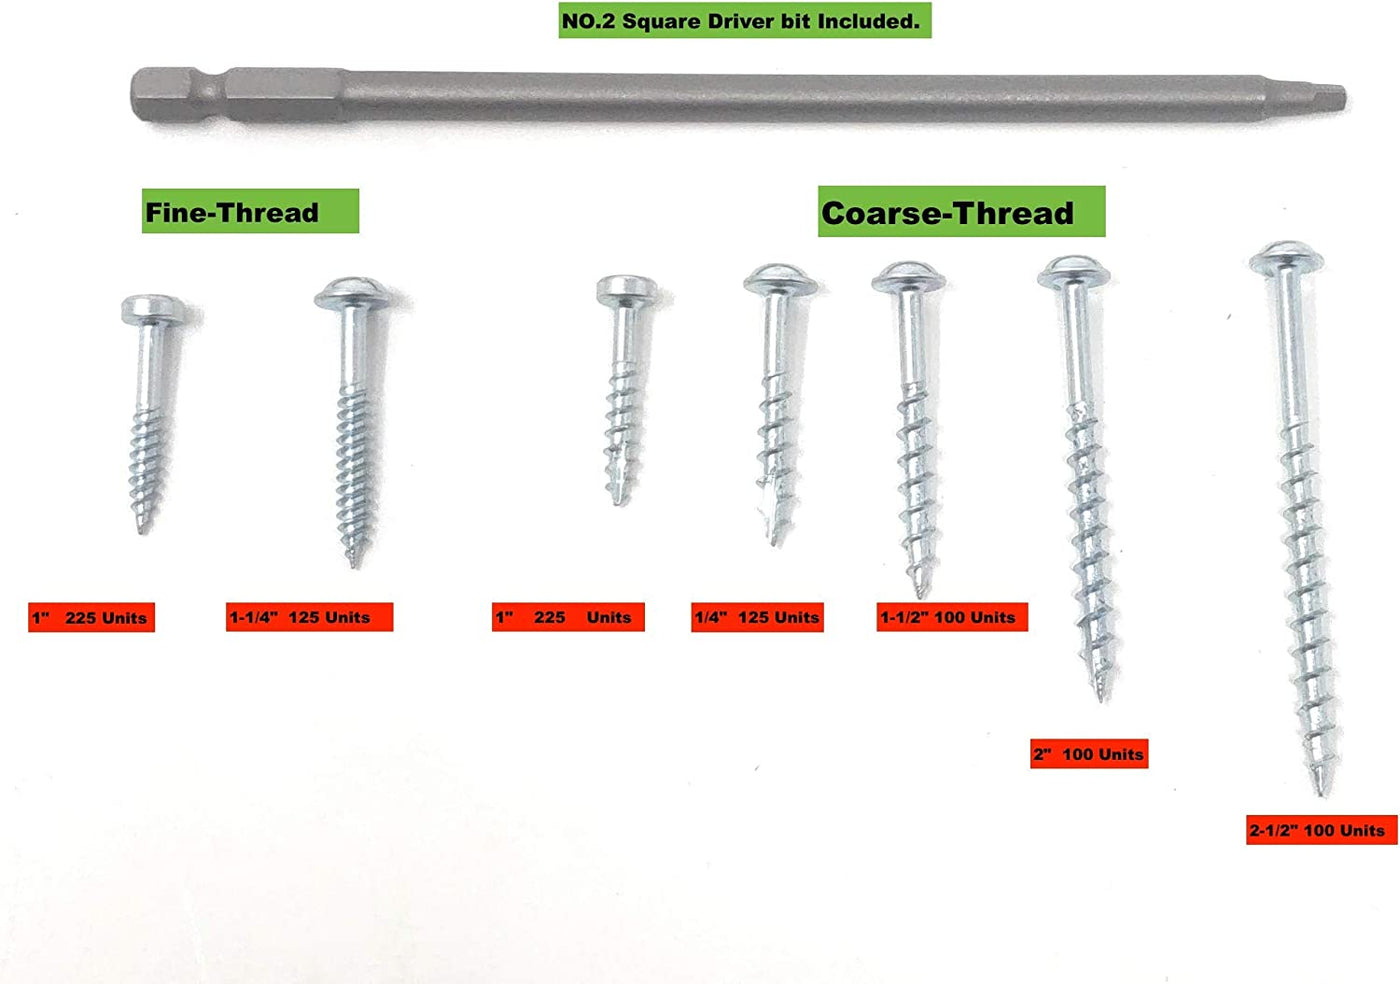 Massca Pocket-Hole Screw Kit 1000 Units | Self Tapping Zinc Plated Screws